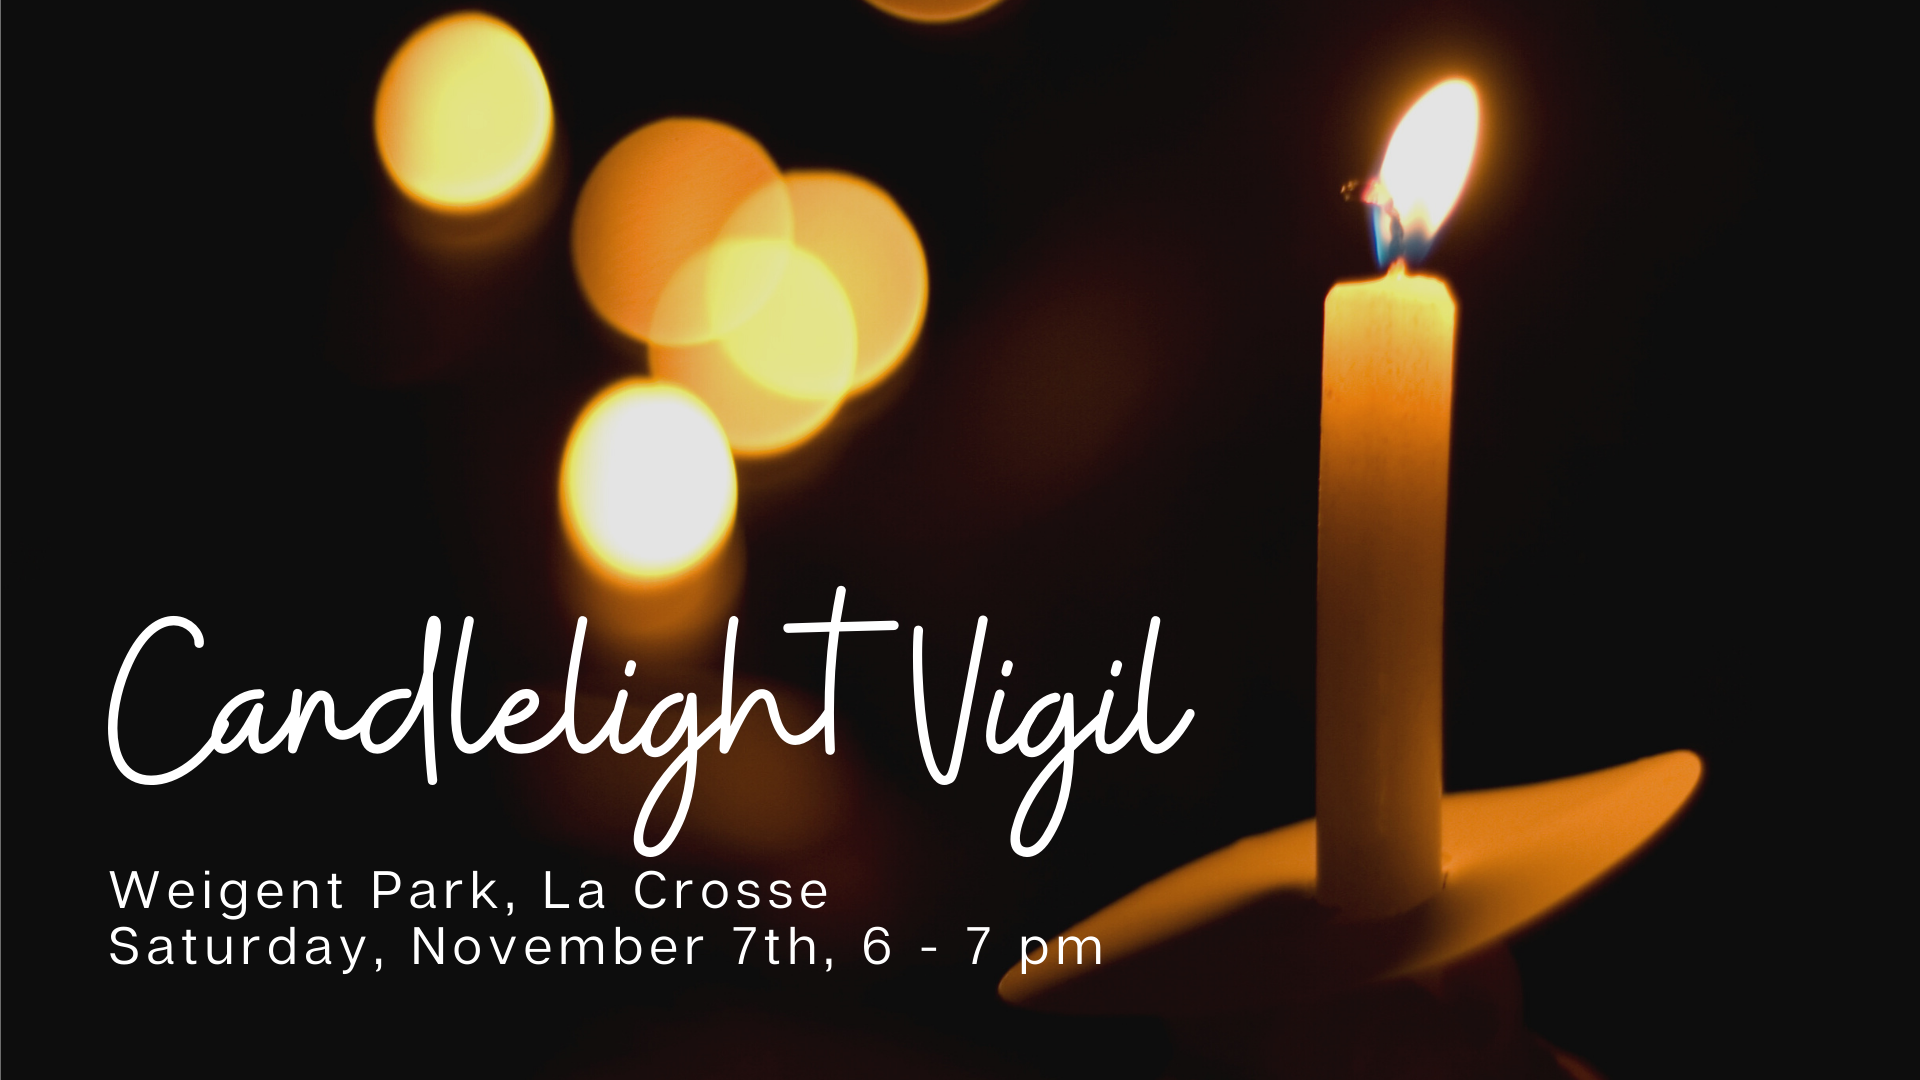 Candlelight Vigil at Weigent Park